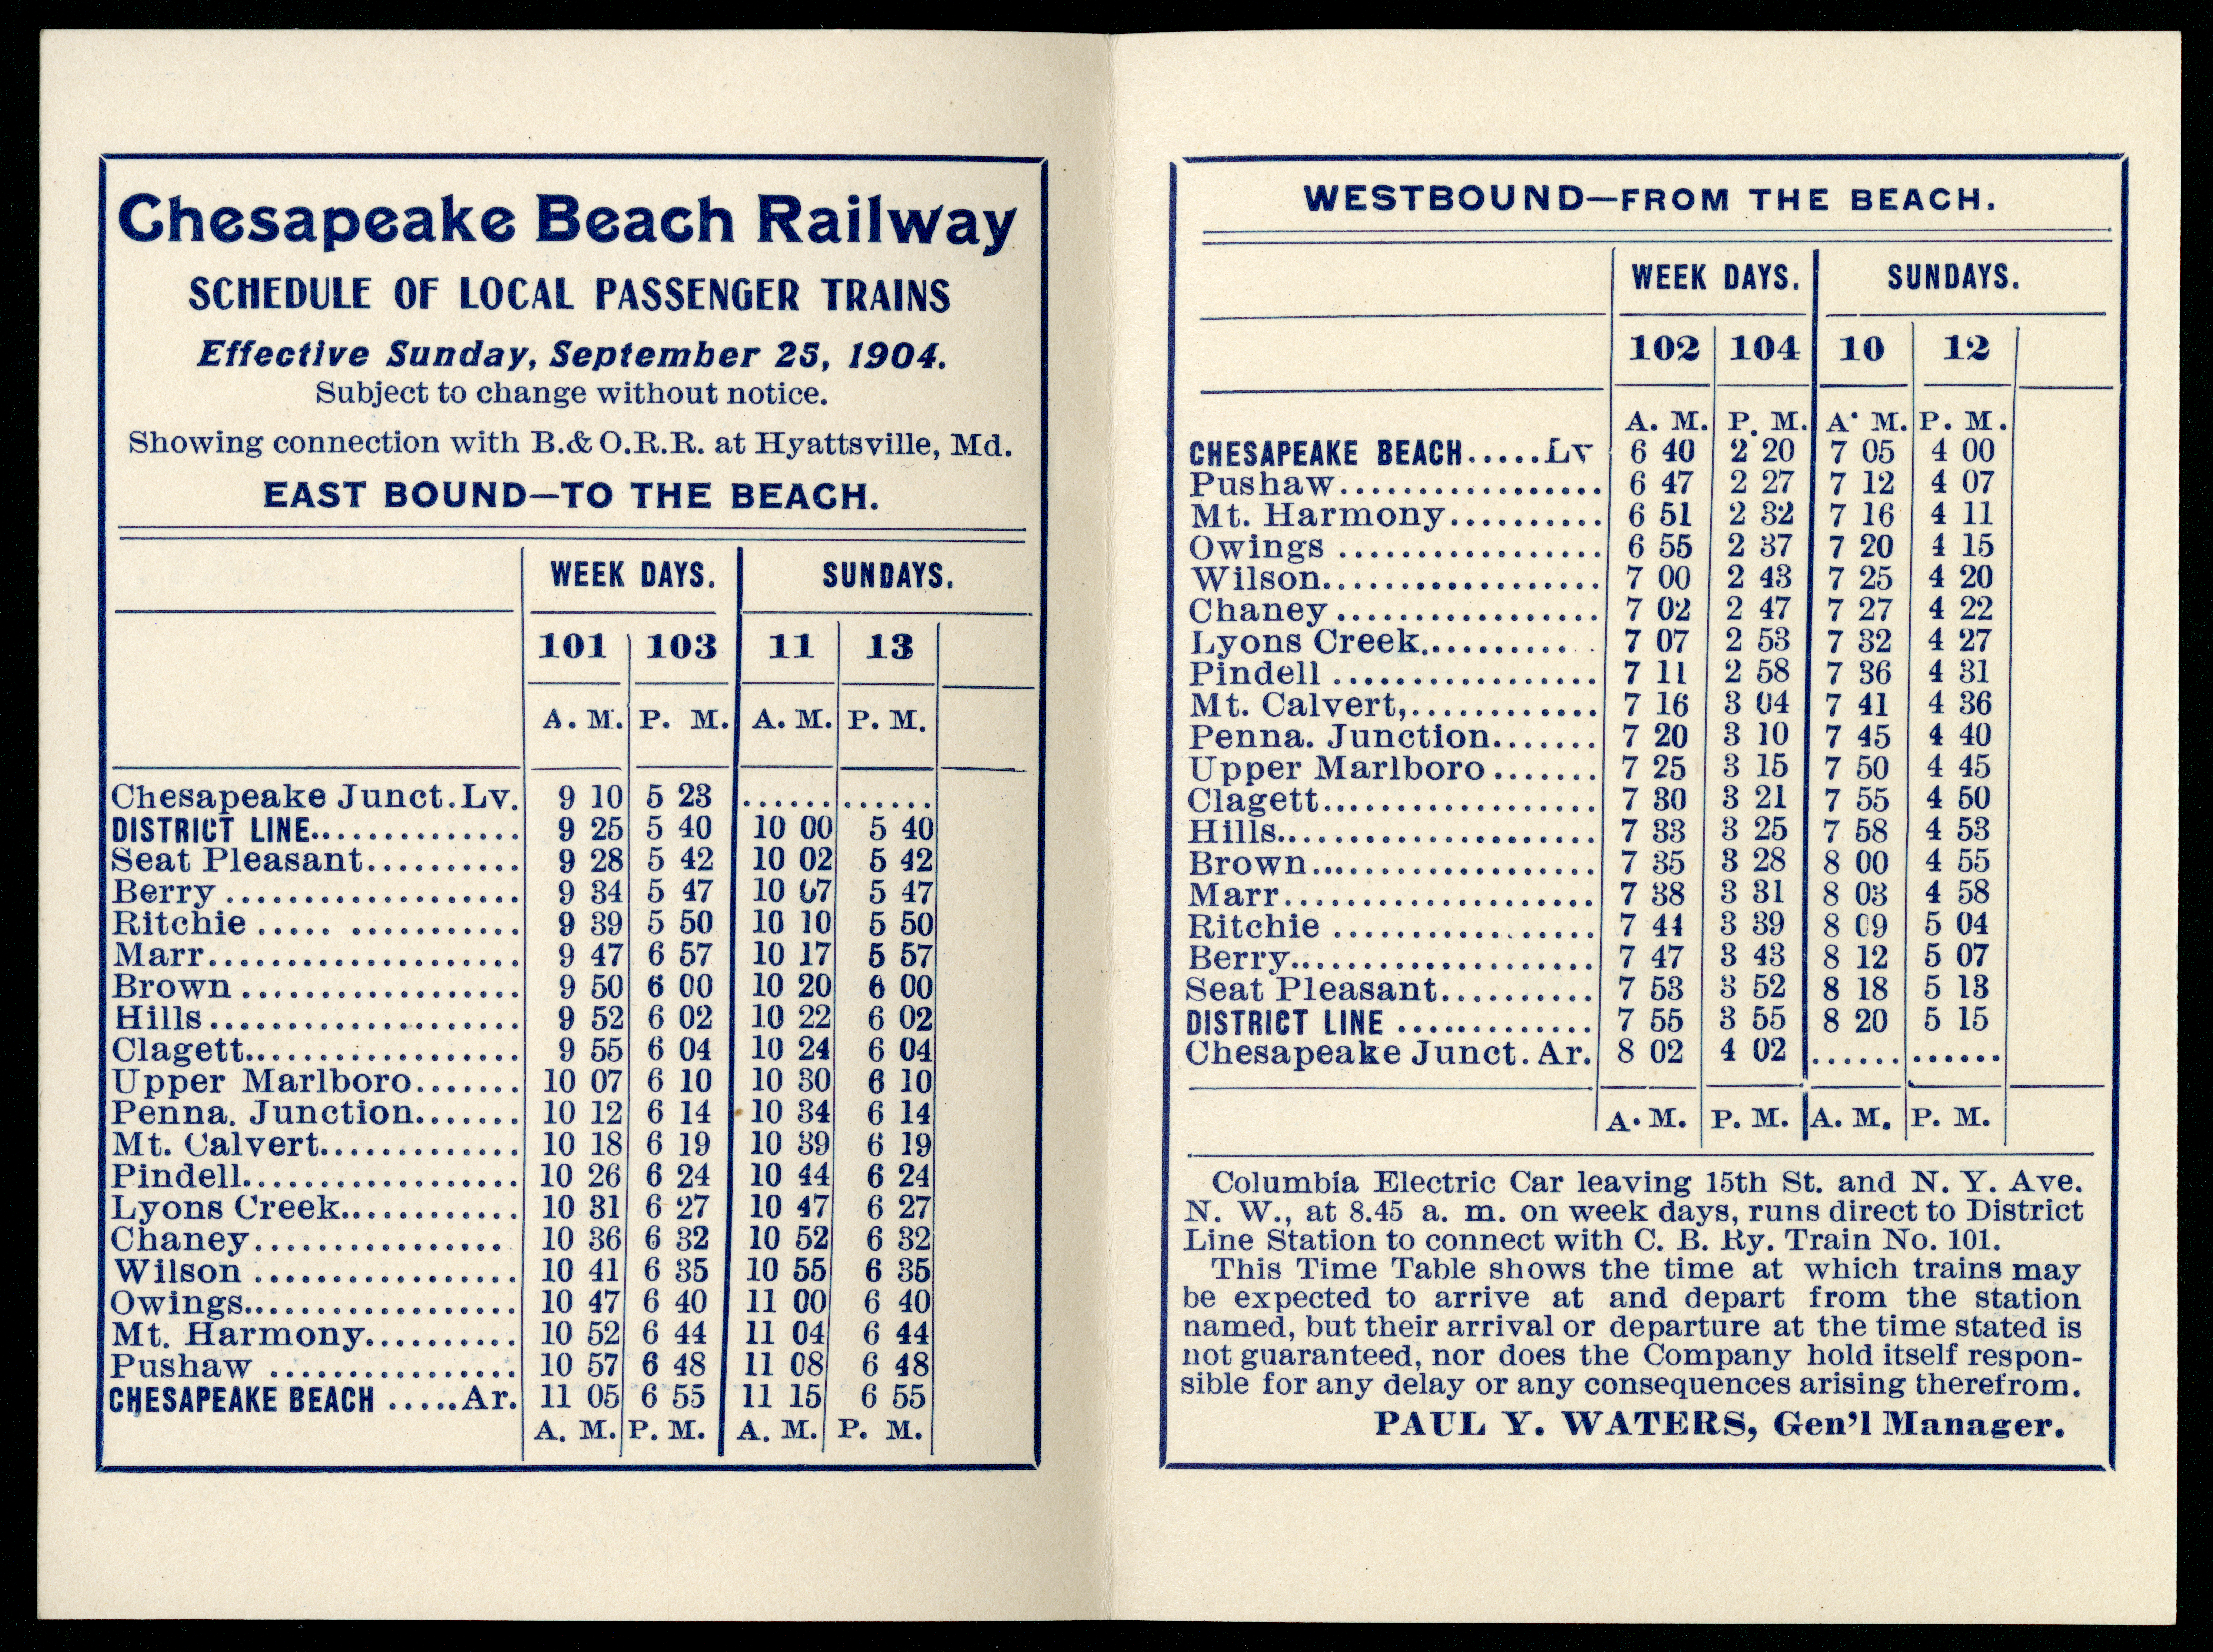 Chesapeake Beach Railway Time Table, 1904